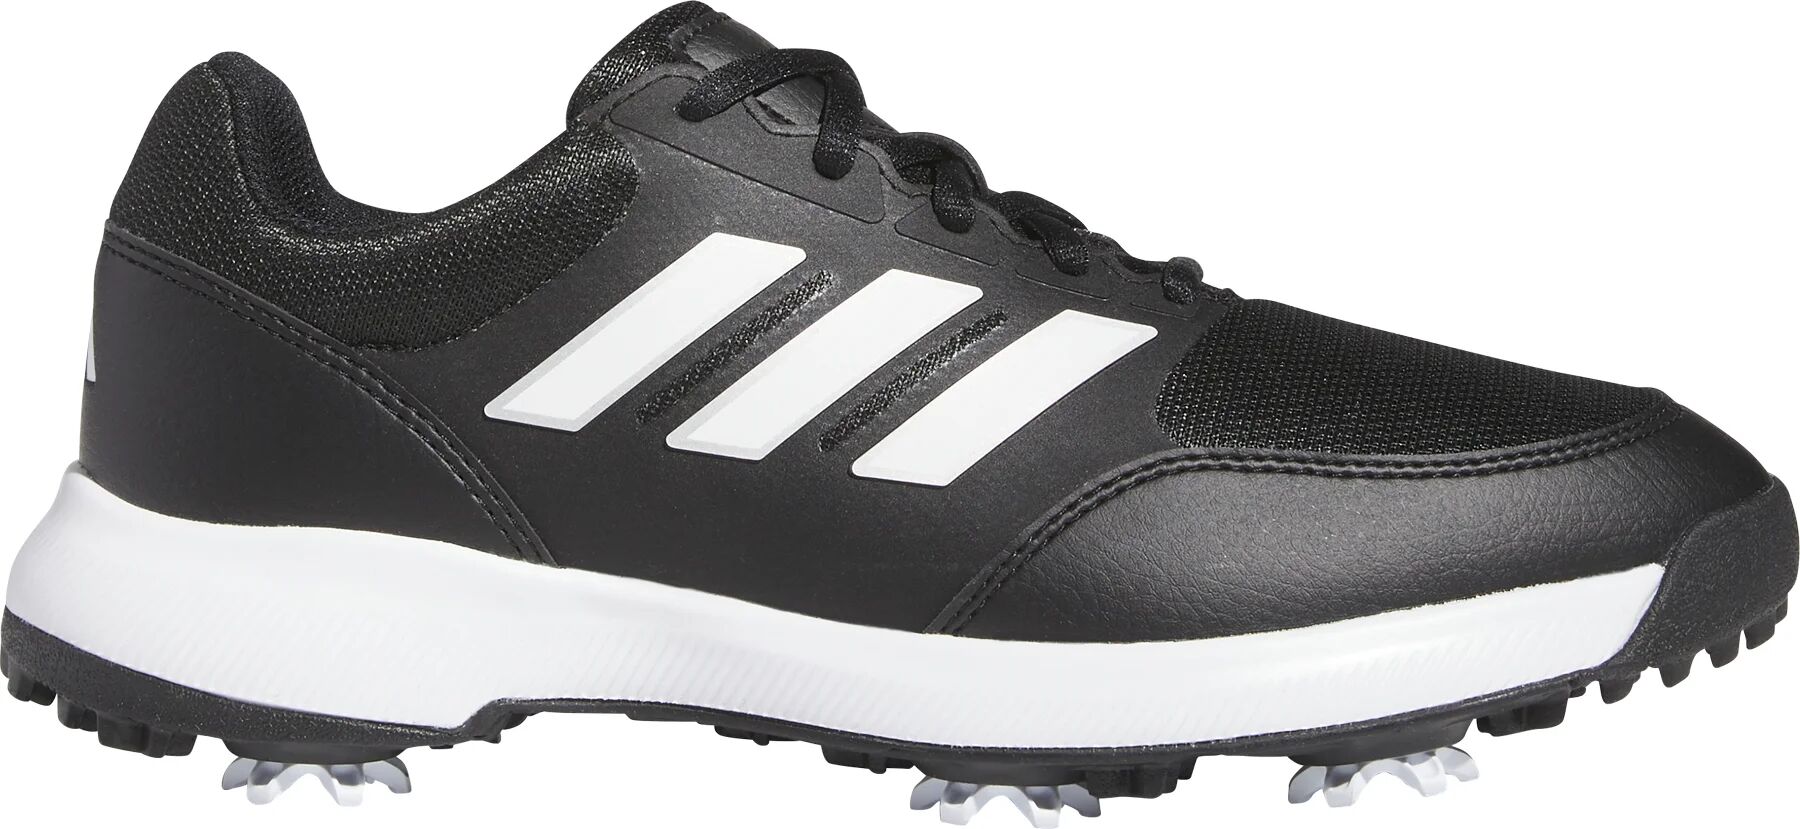 adidas Womens Tech Response 3.0 Golf Shoes - Core Black/Cloud White/Silver Metallic - 7 - MEDIUM